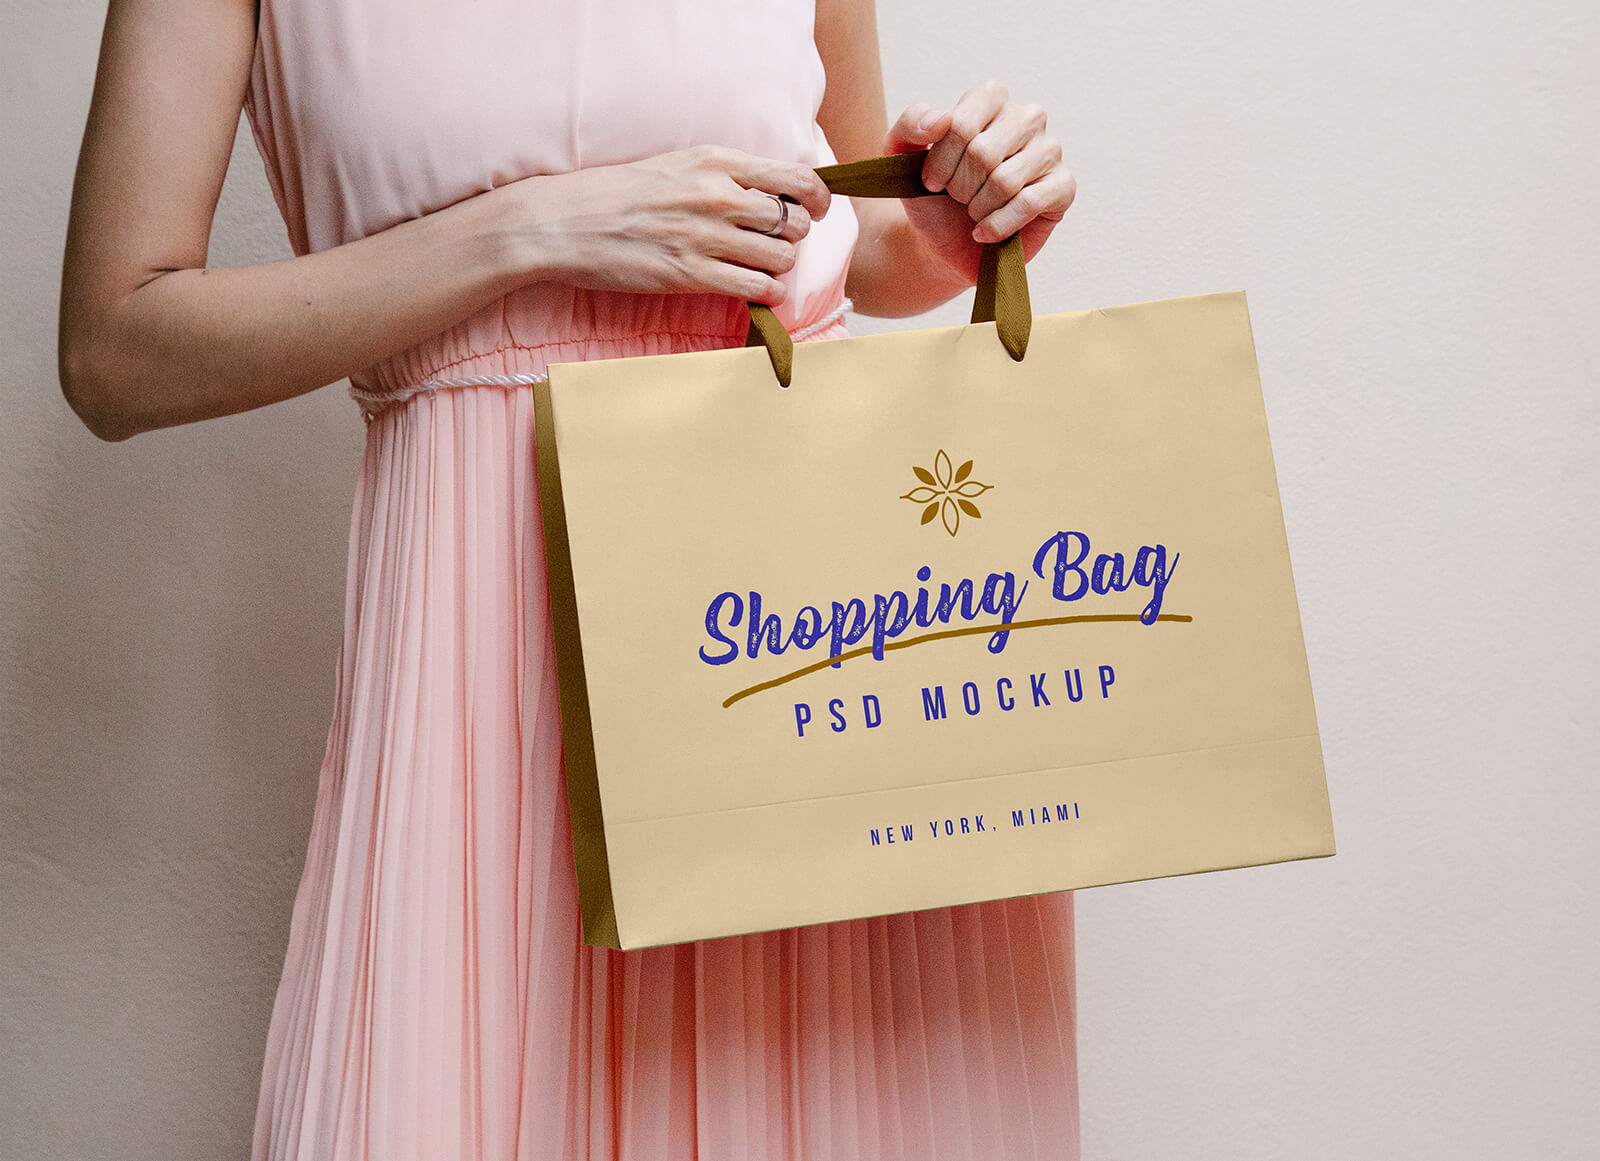 Download Women Holding Shopping Bag Mockup